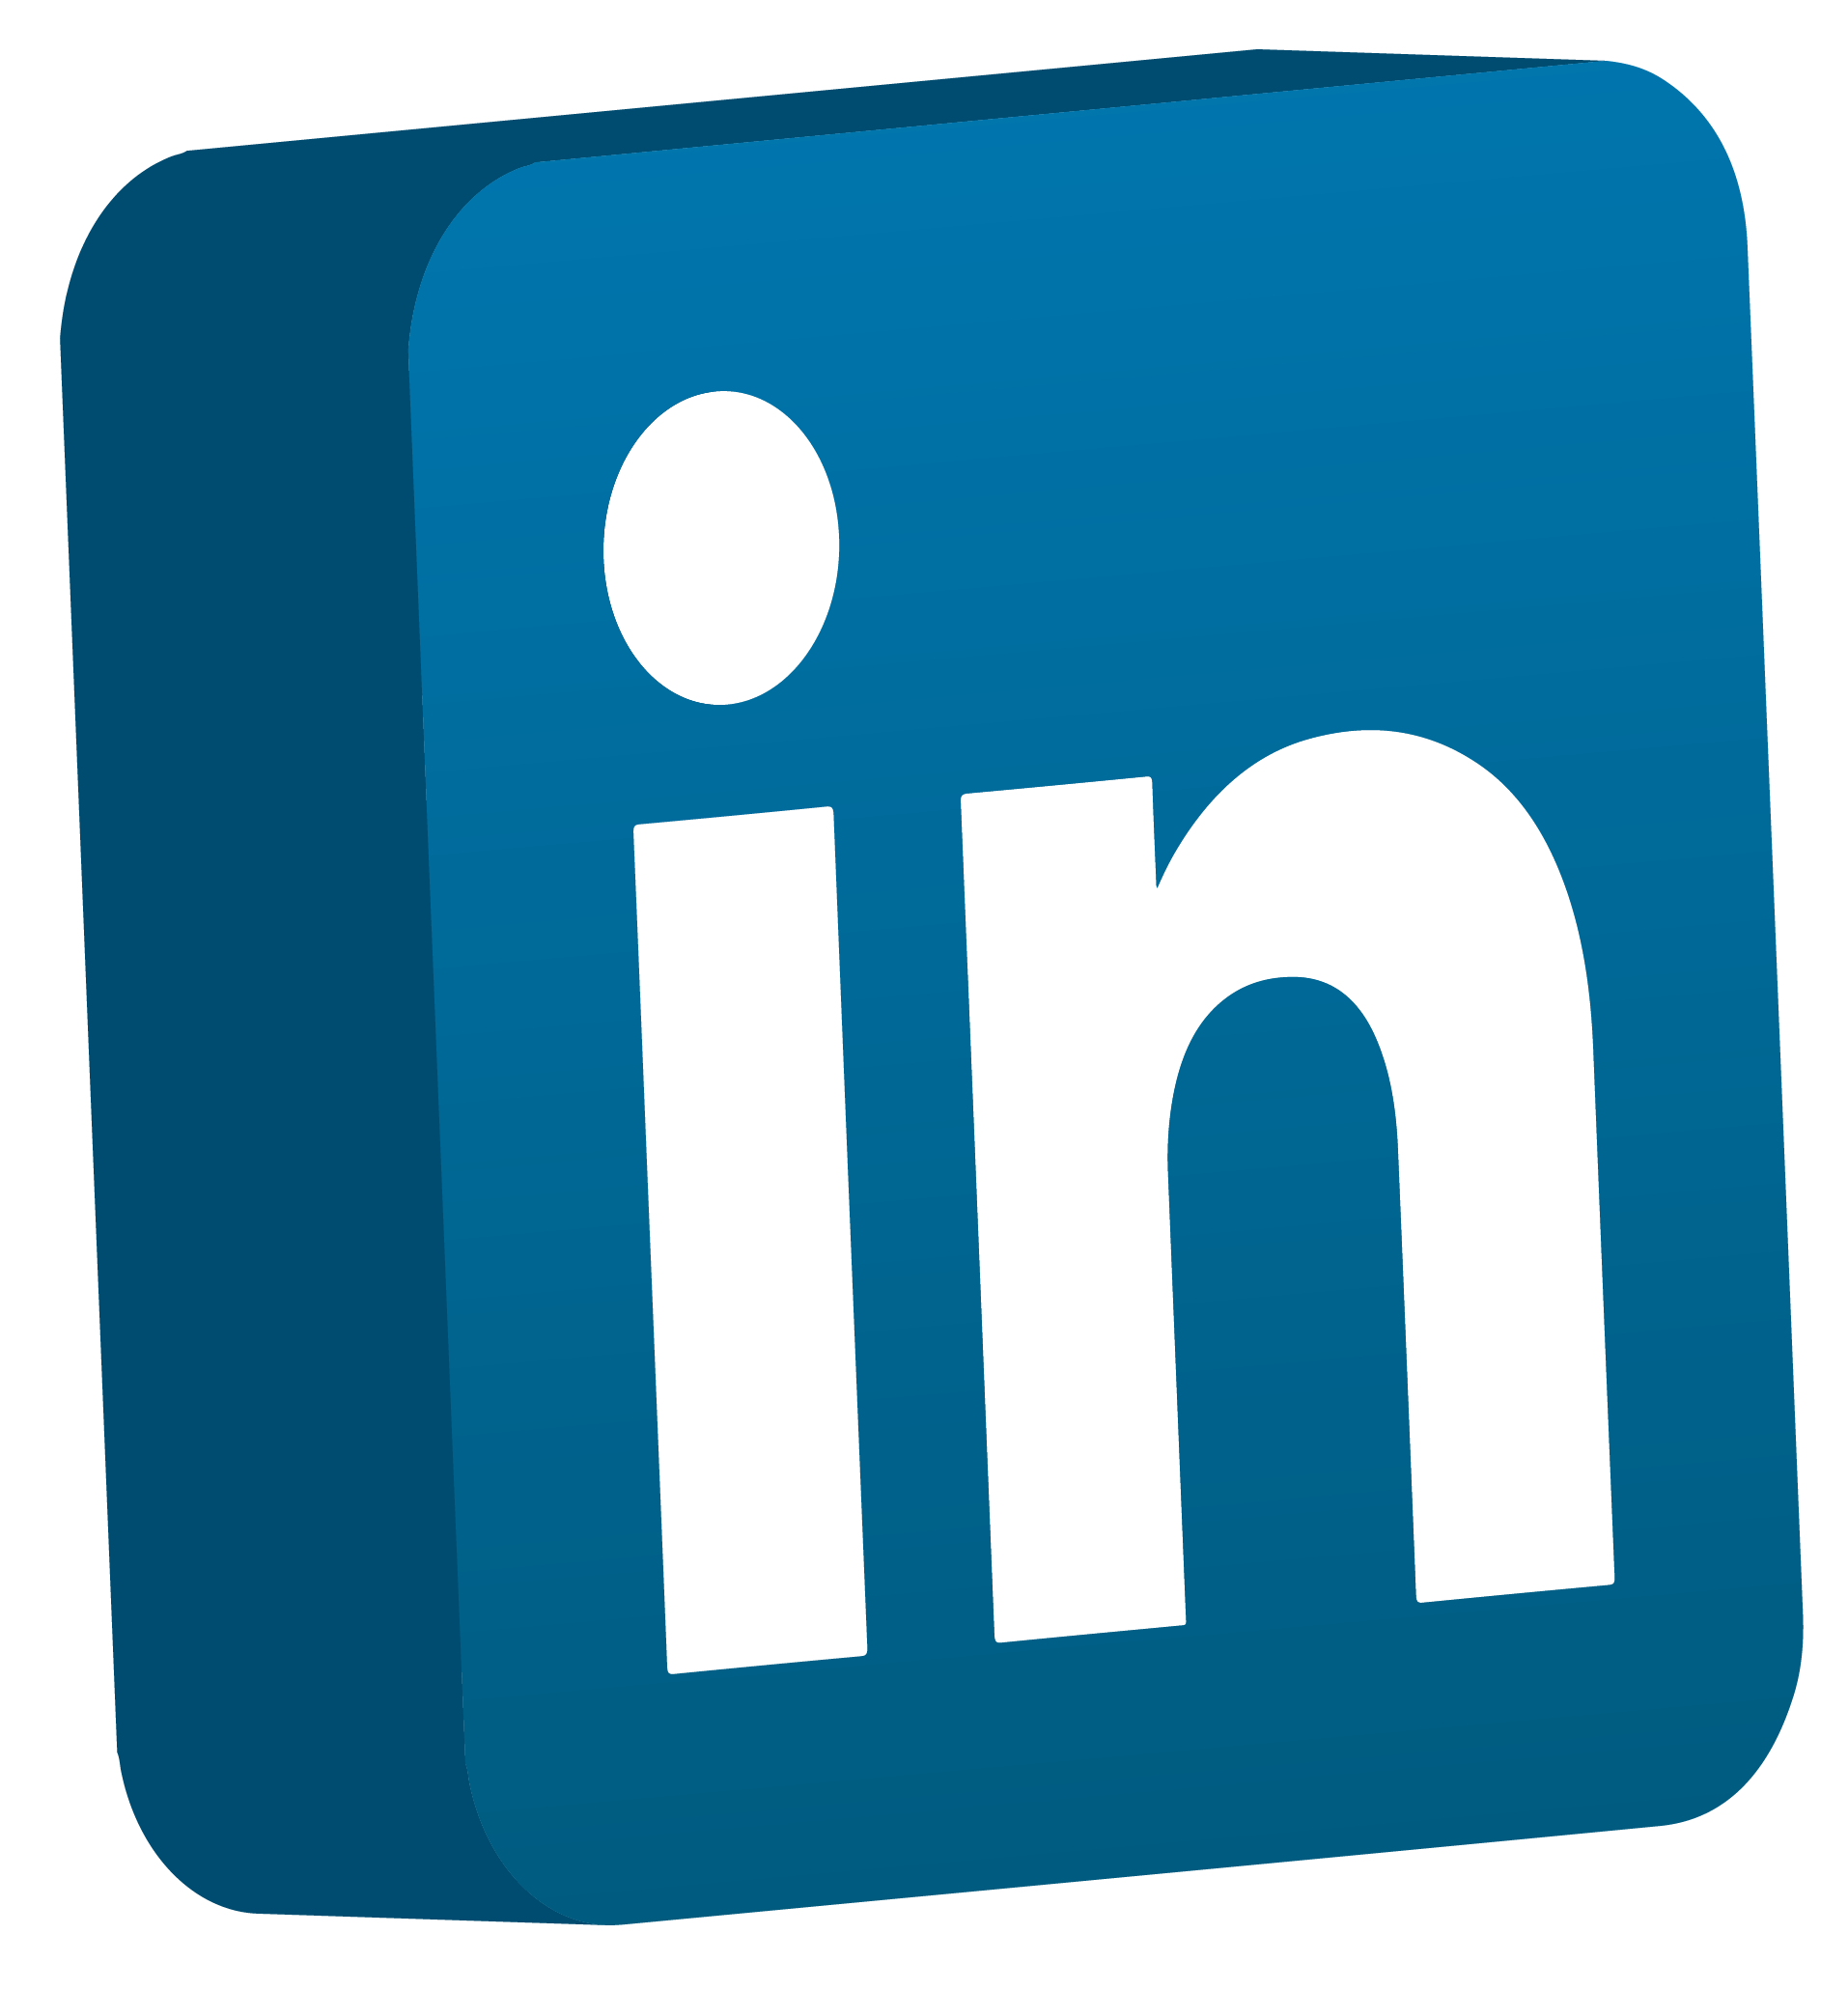 LinkedIn logo icon